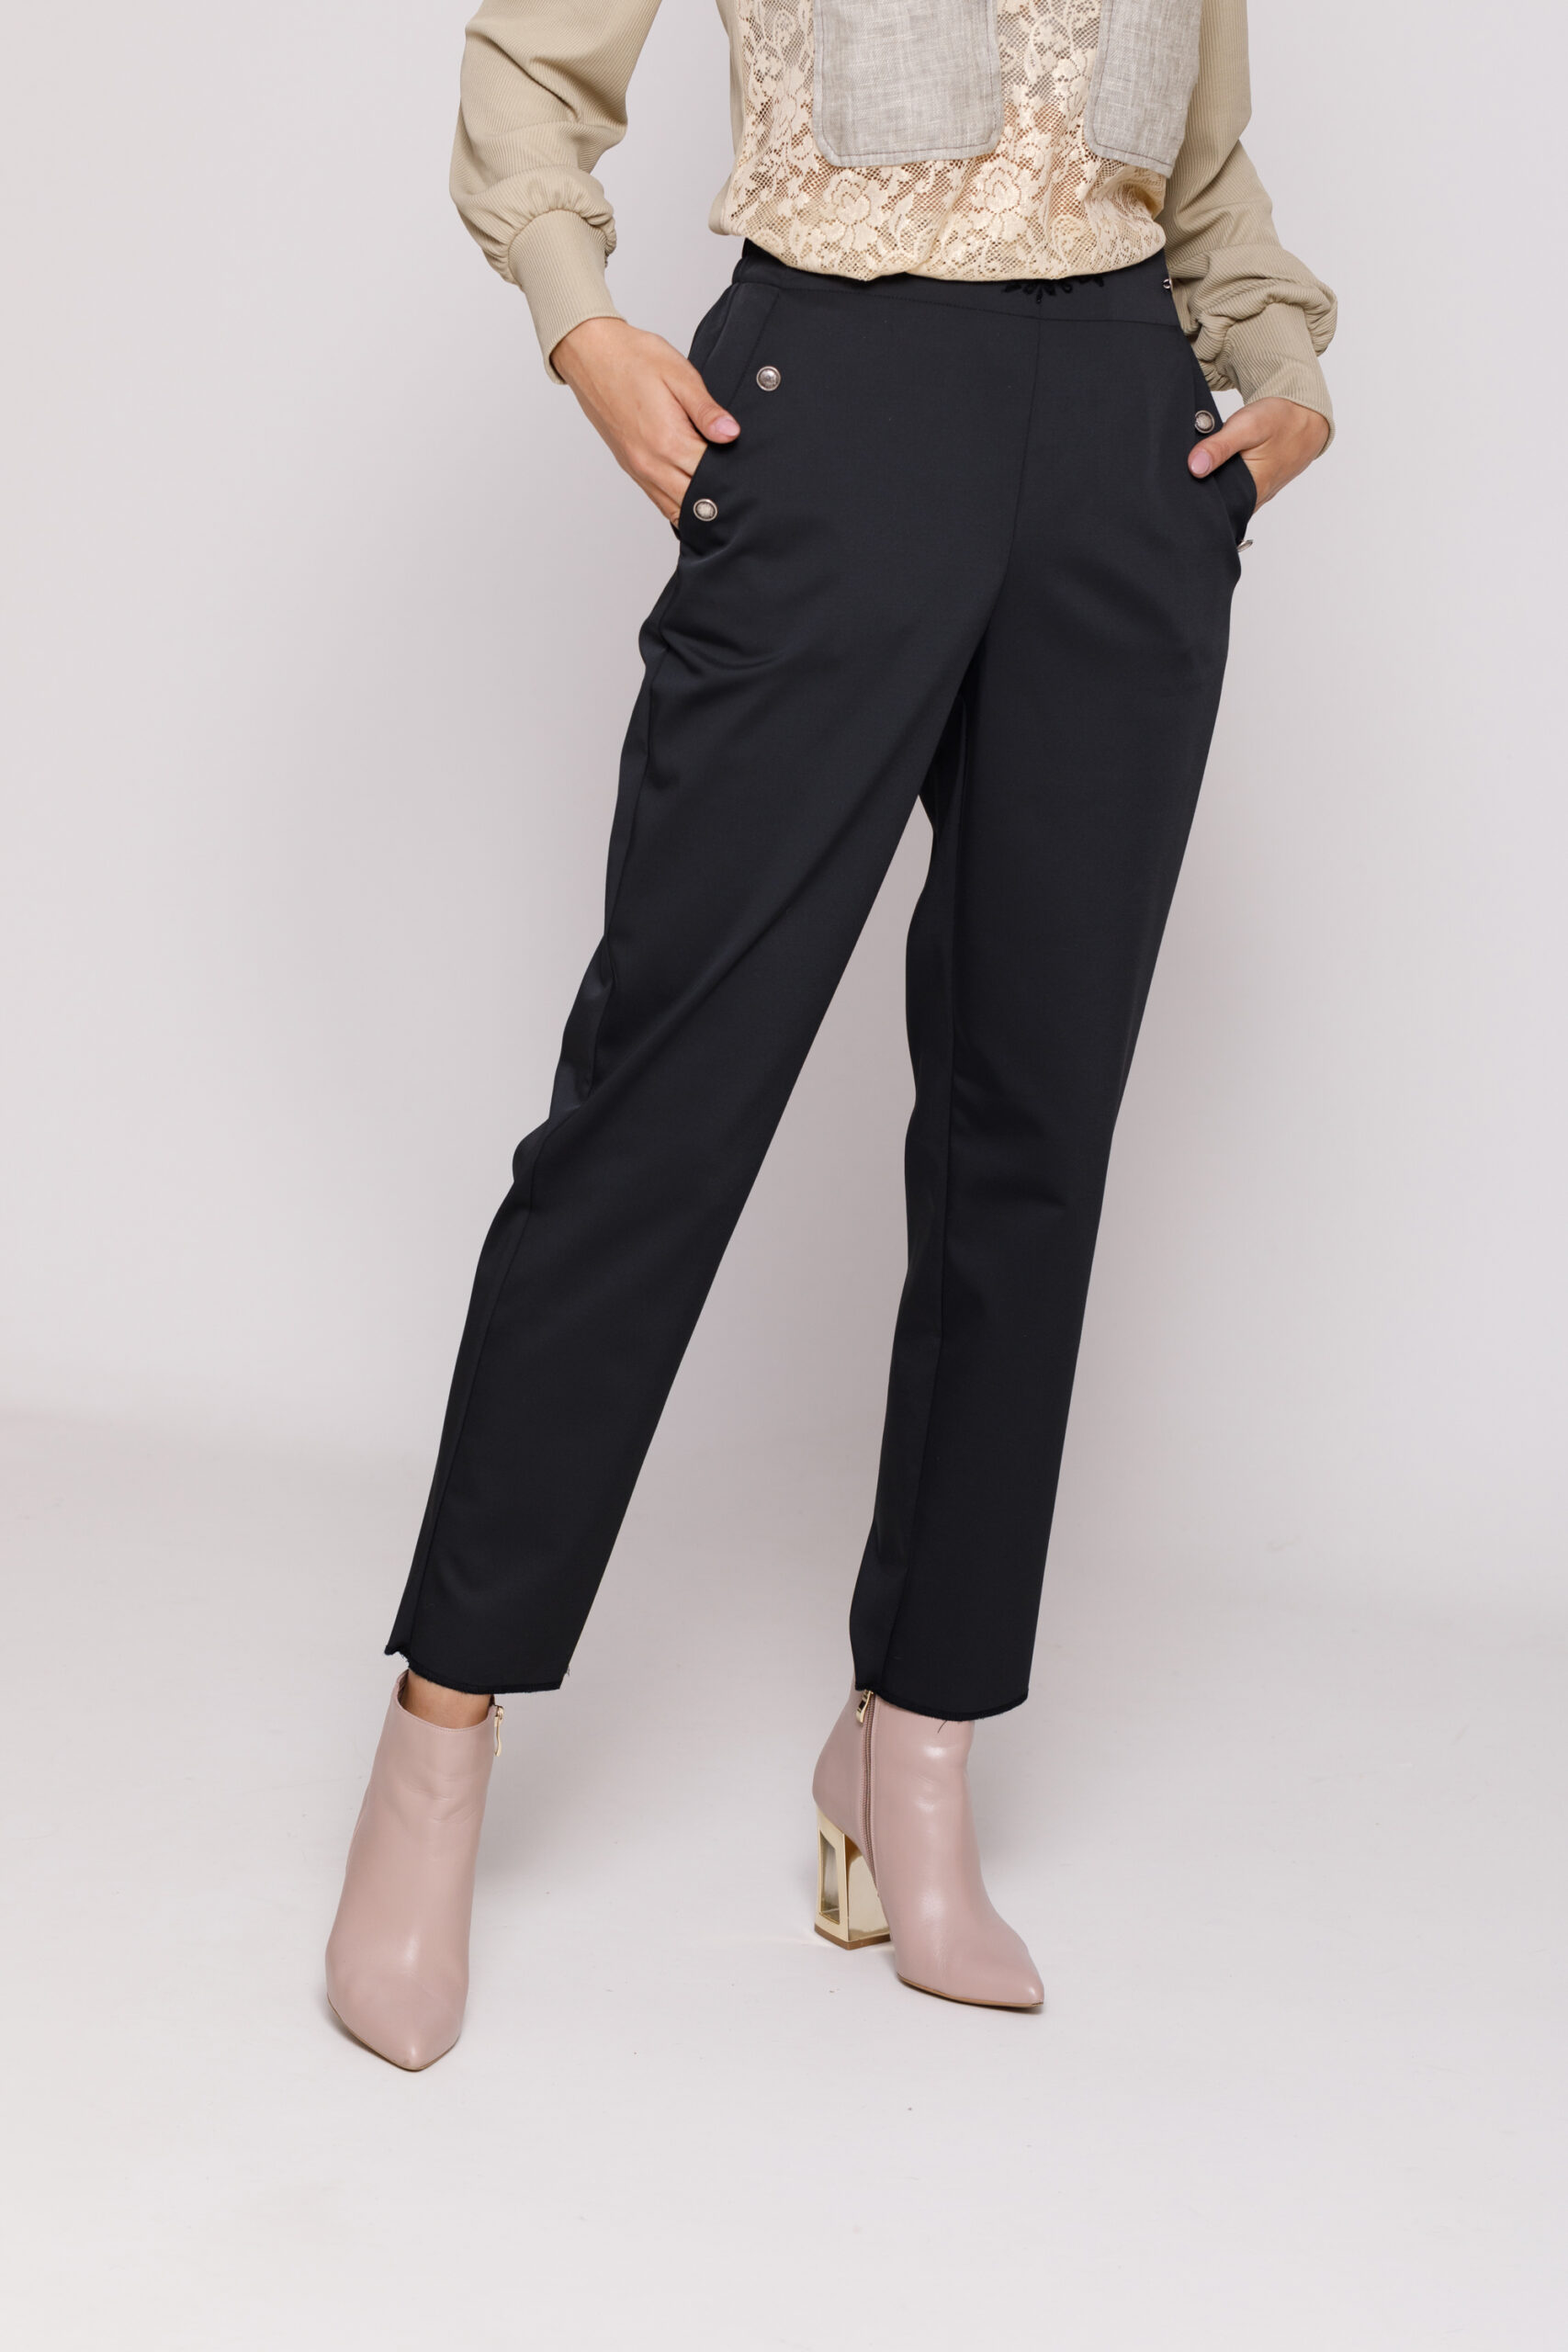 RADA Elegant black pants with buttons. Natural fabrics, original design, handmade embroidery